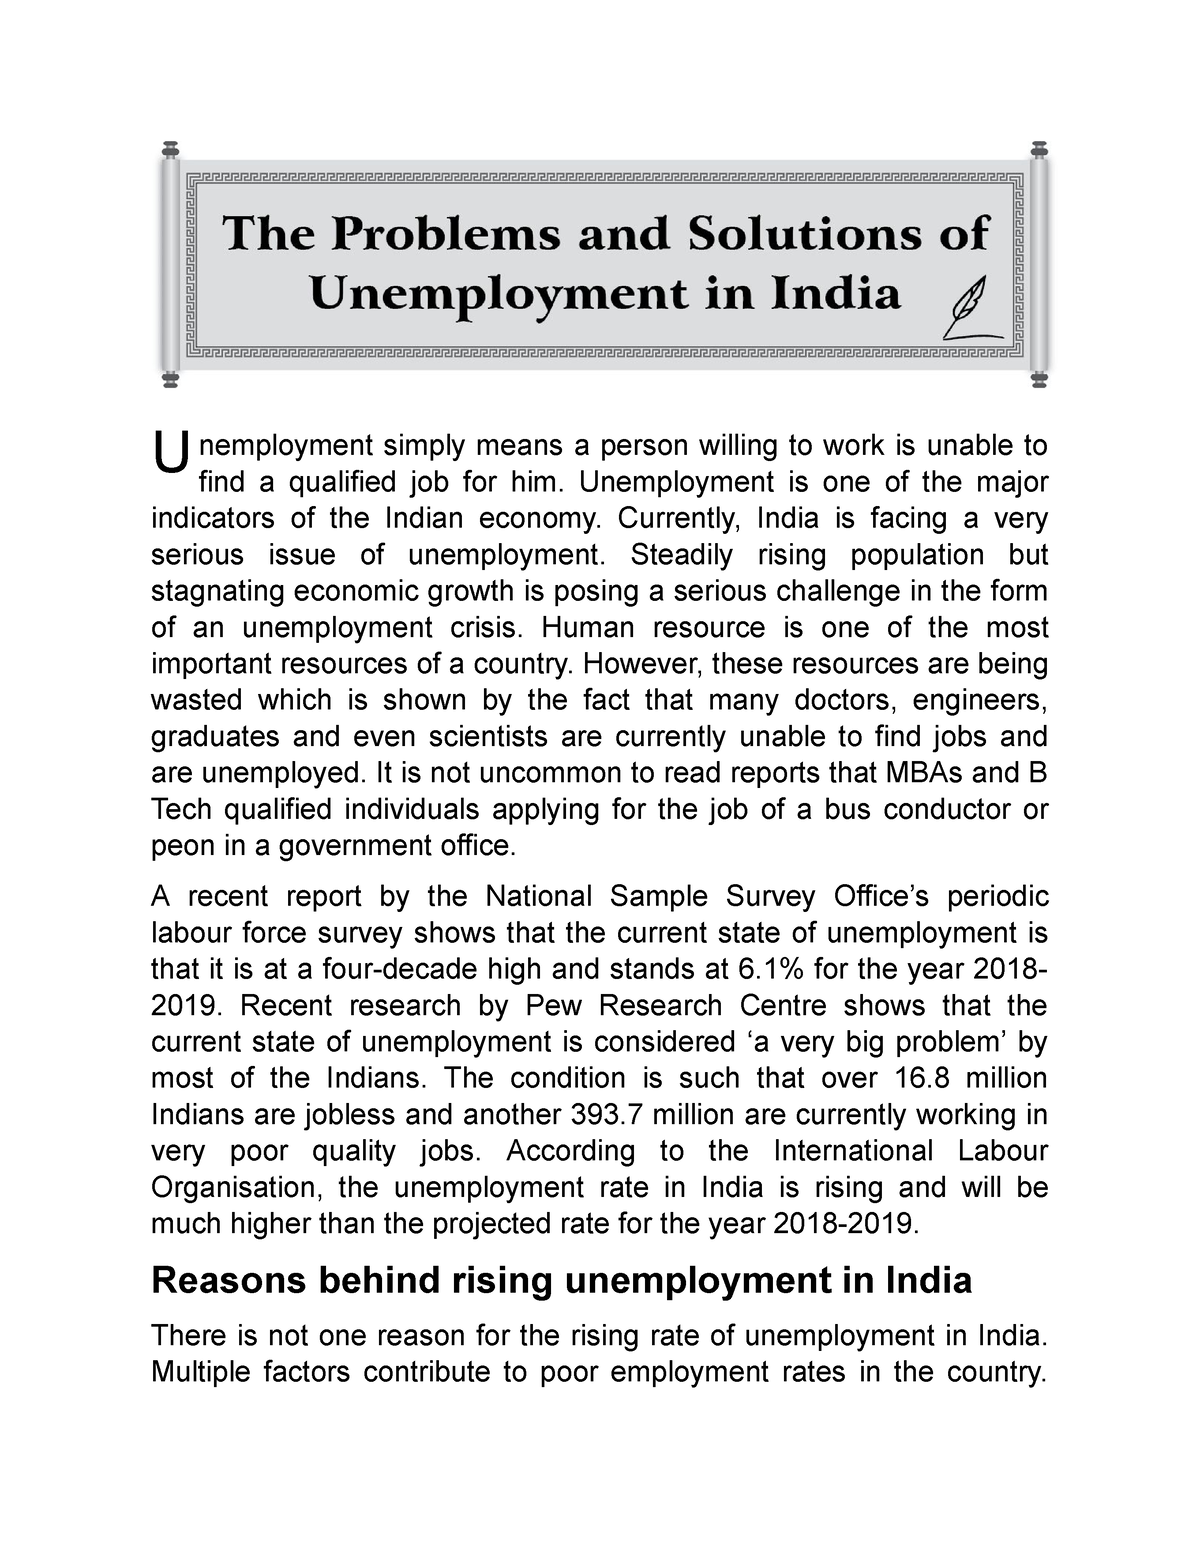 unemployment problem in india essay 300 words